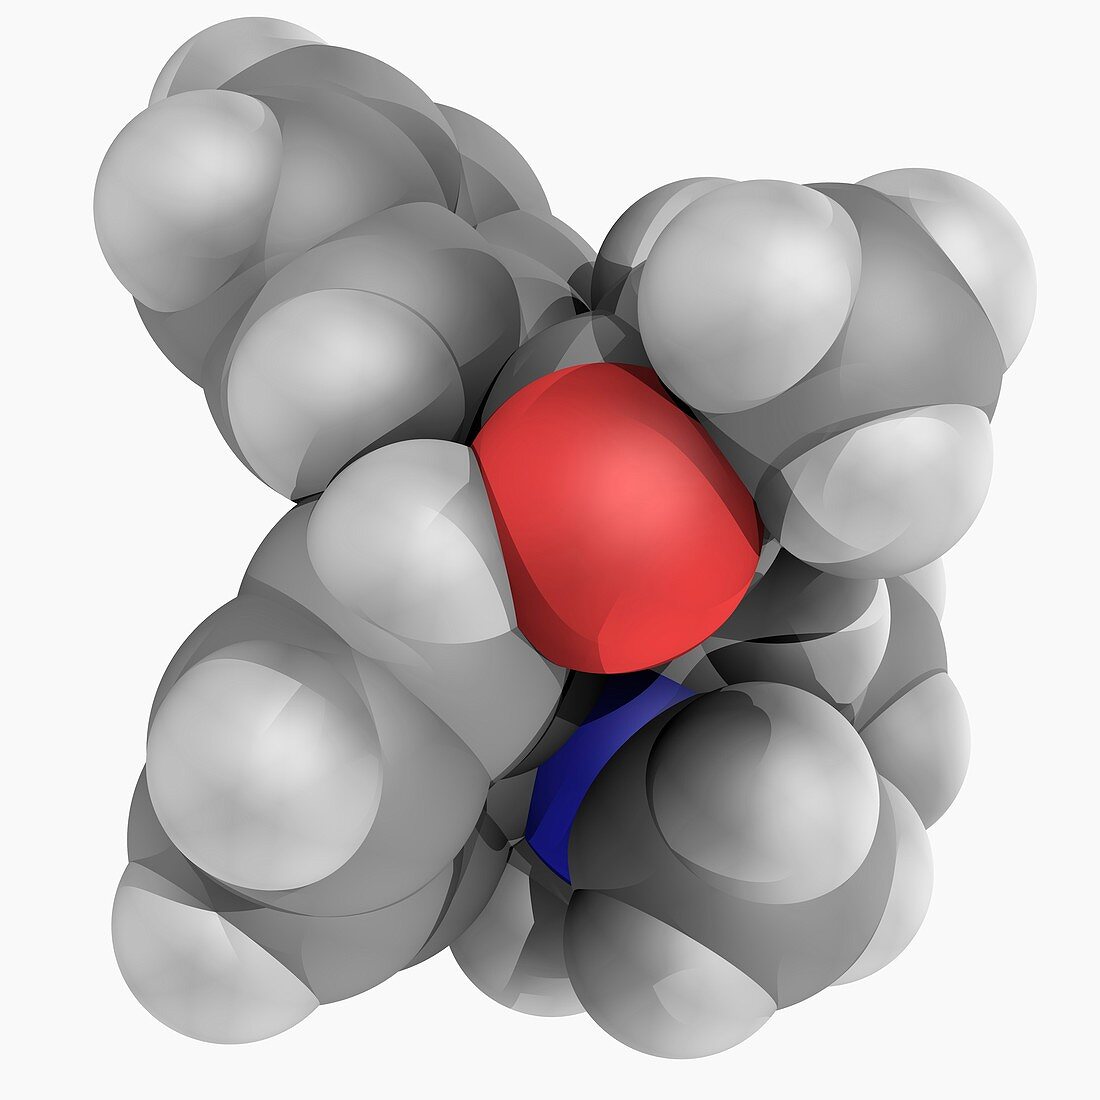 Methadone drug molecule